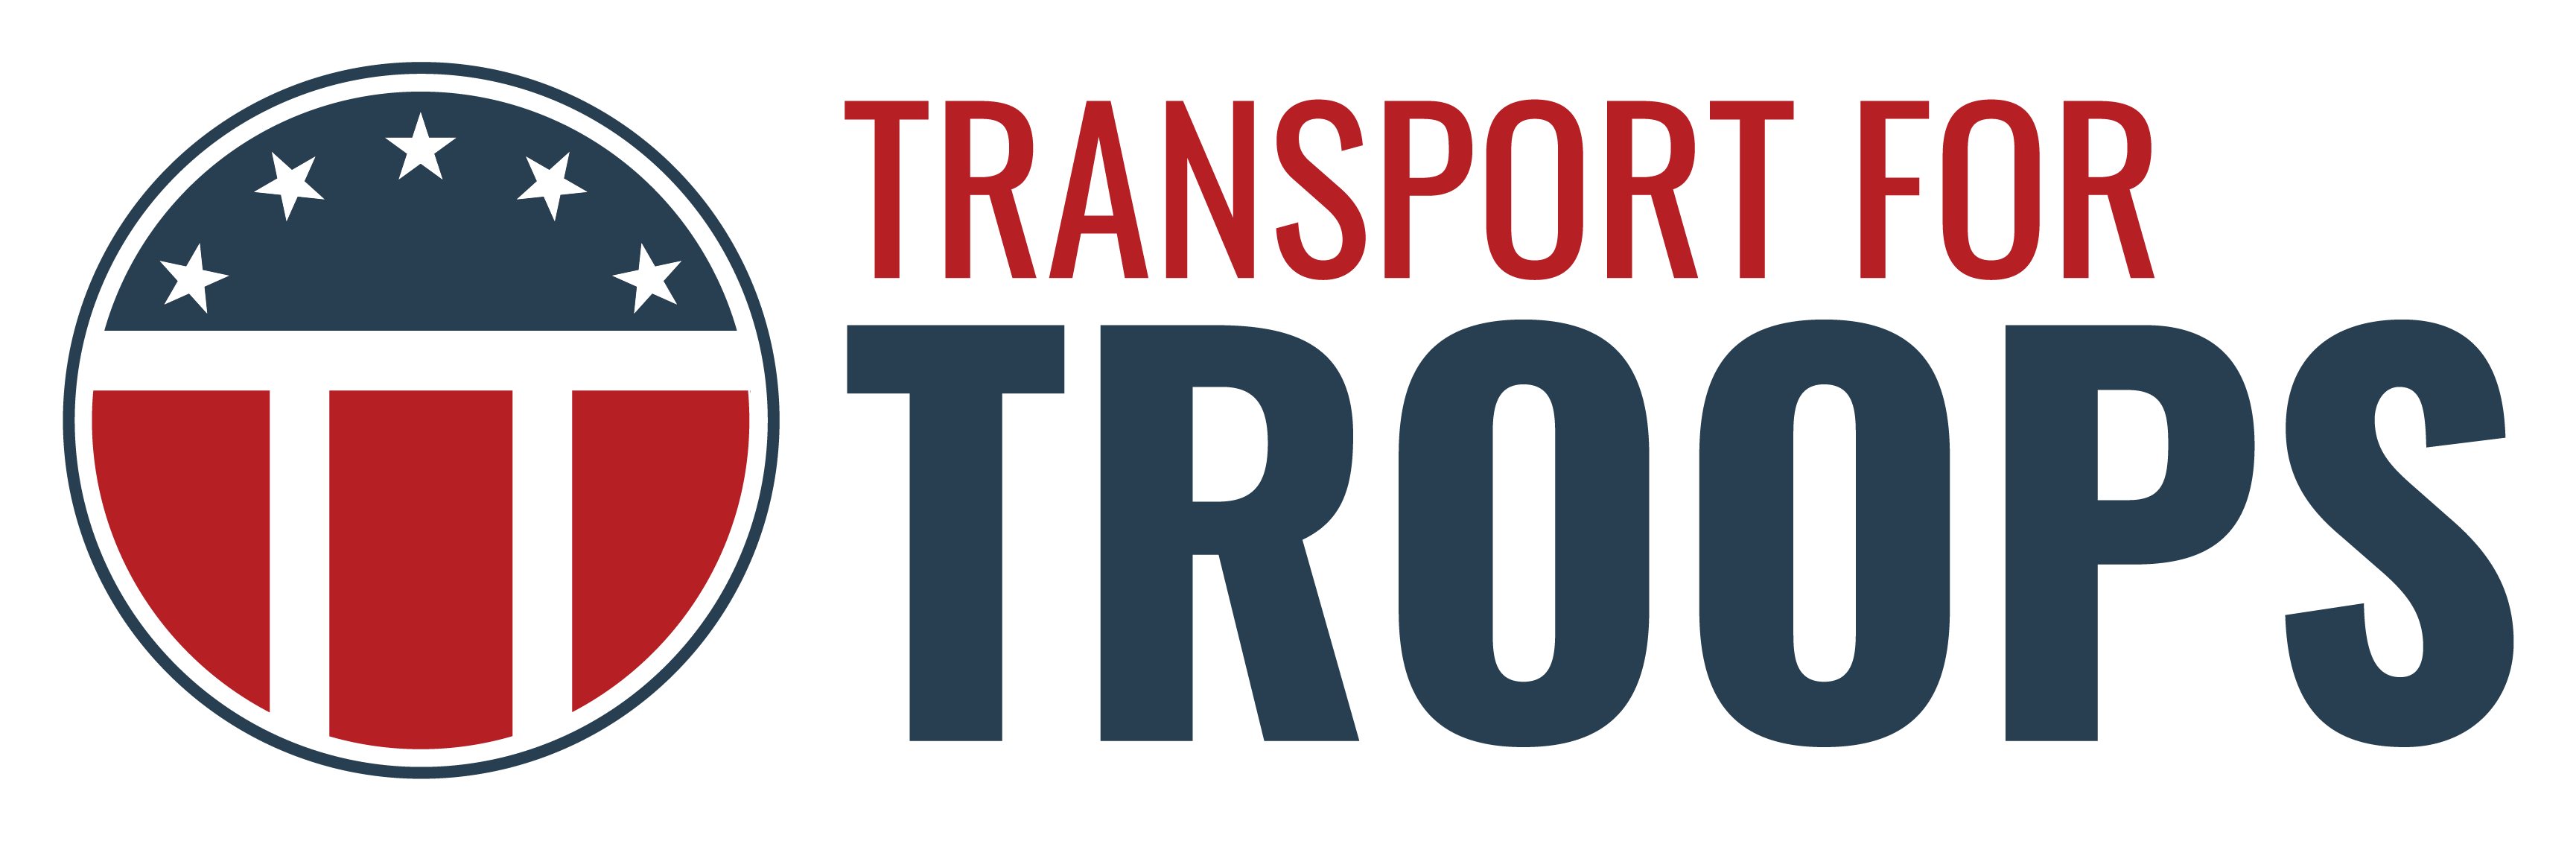 transport-for-troops-horizontal-logo